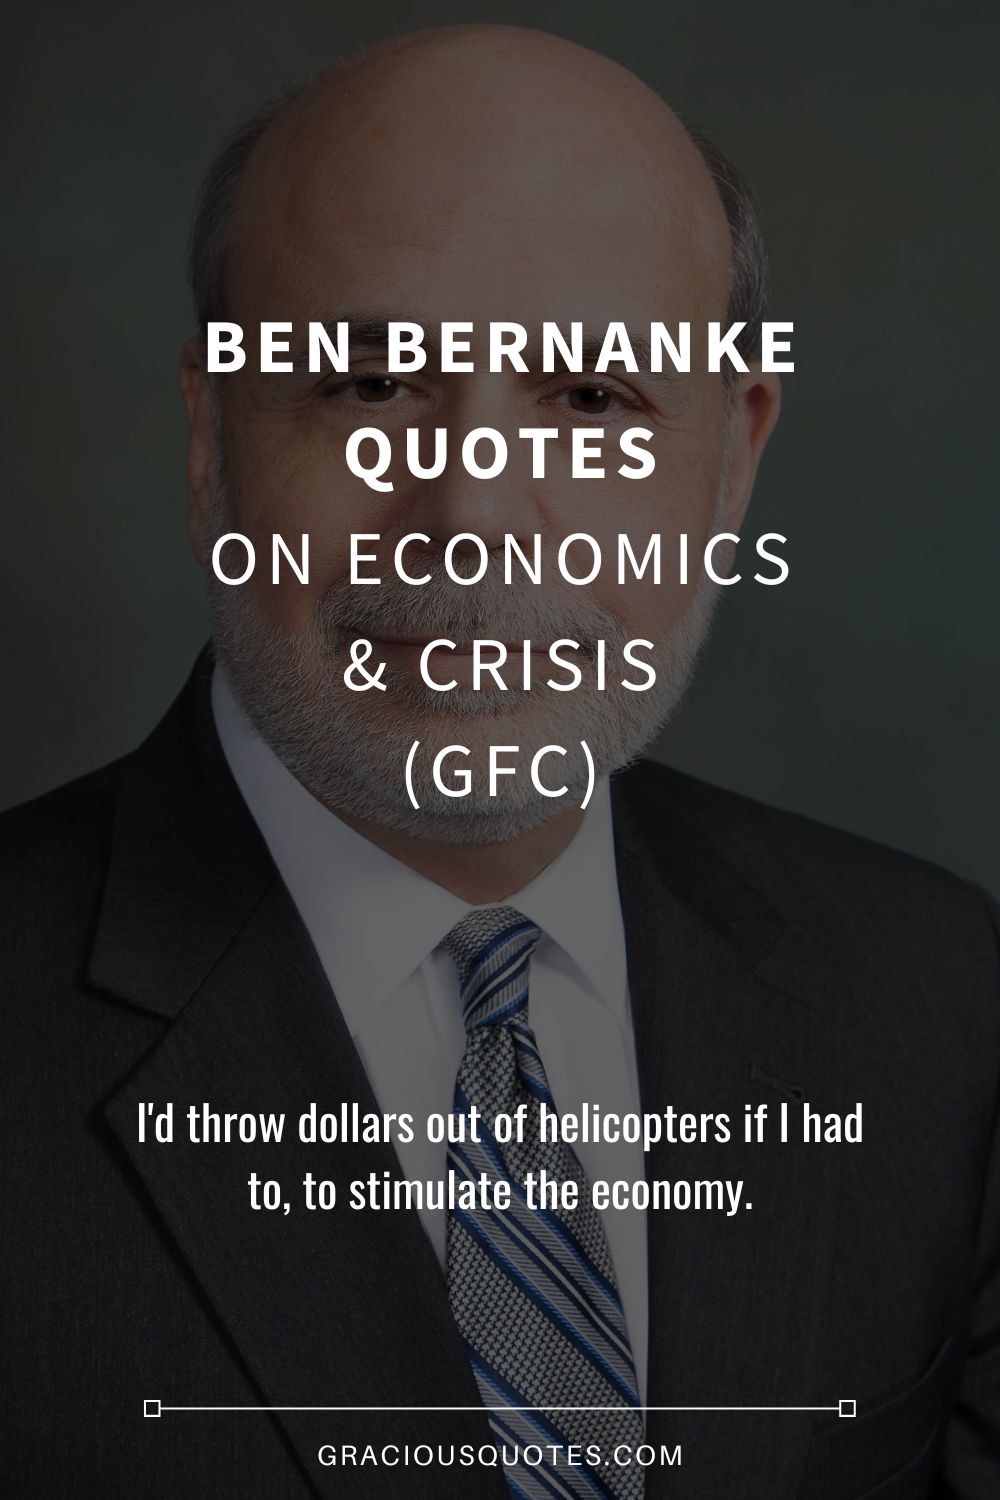 Ben Bernanke Quotes on Economics & Crisis (GFC) - Gracious Quotes